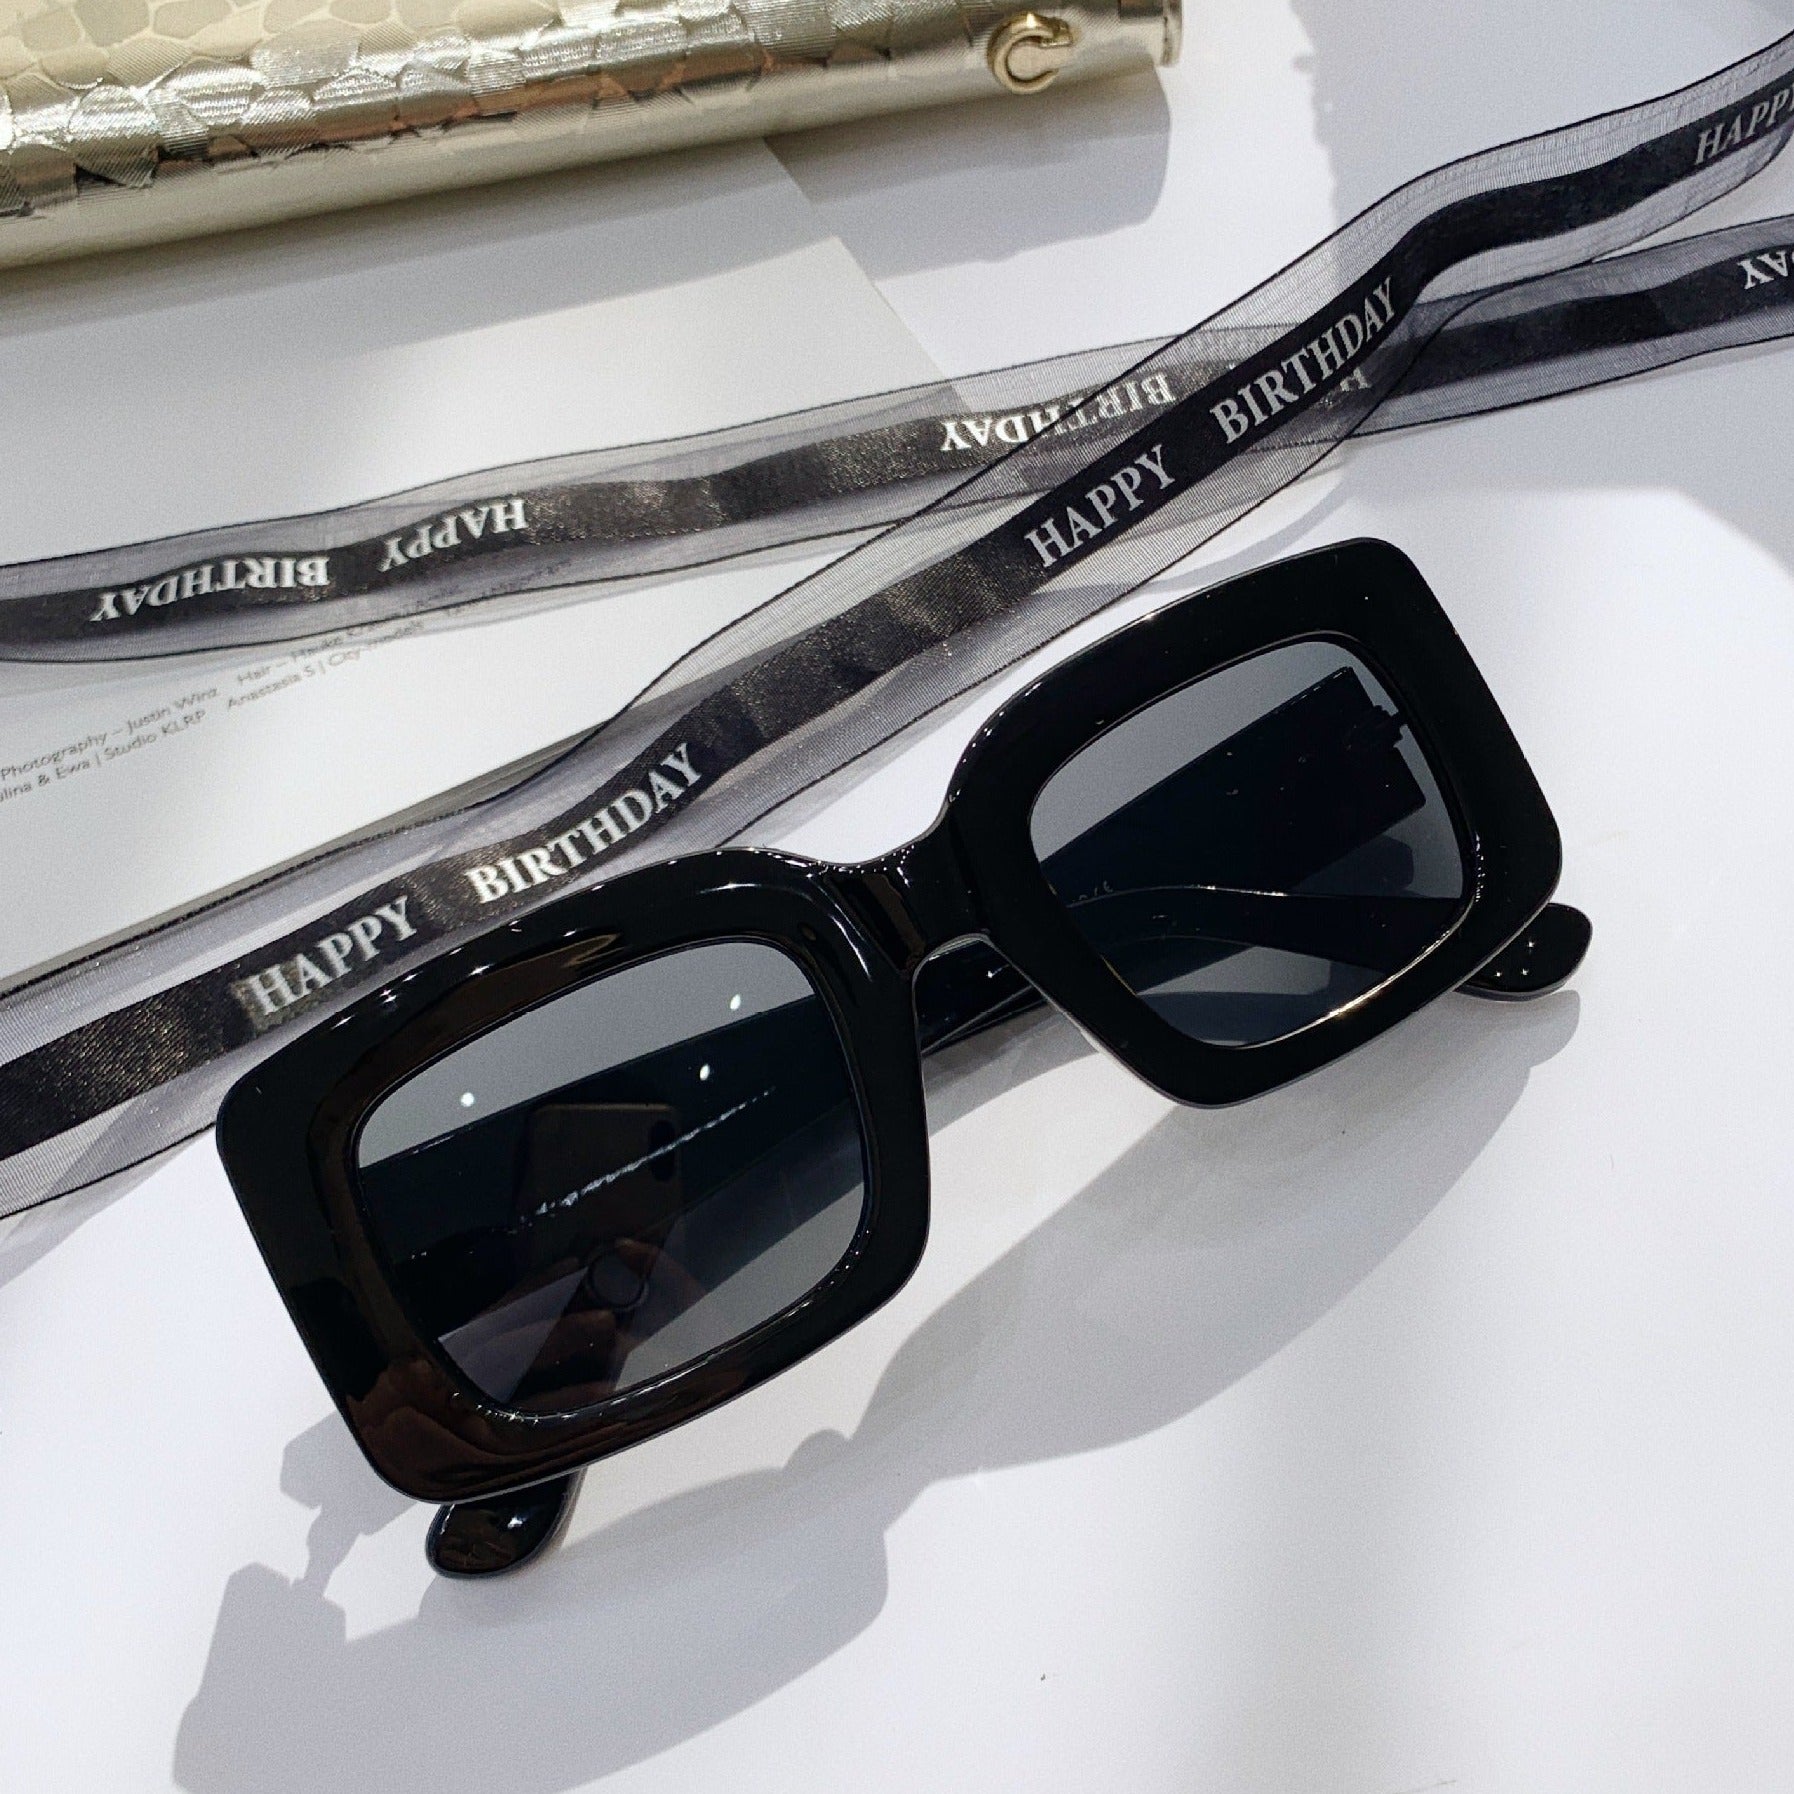 Royale Oversized Thick Bold Square Classic Retro Luxury Sunglasses –